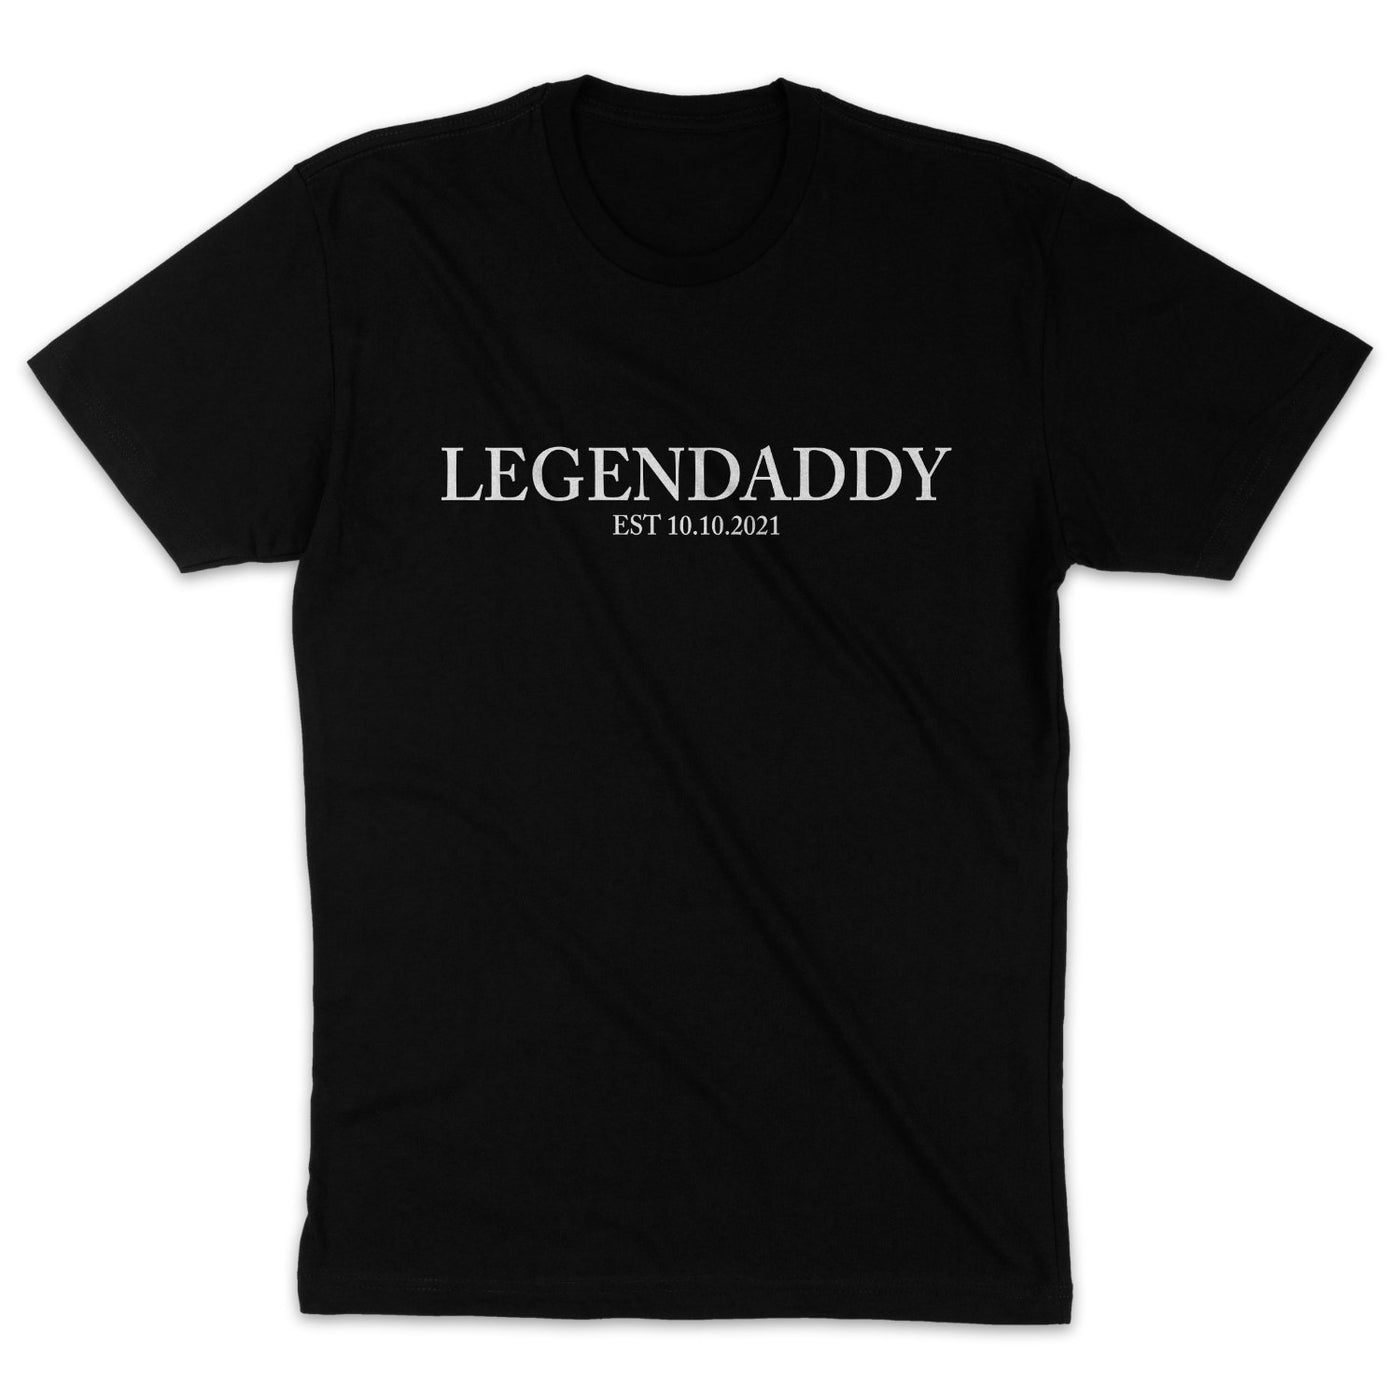 Legendaddy T-Shirt Vatertag Geschenk Papa Shirt Personalisiert Vatertagsgeschenk Geburt Kind Geburtsgeschenk T-Shirt für Papa Sohn Tochter